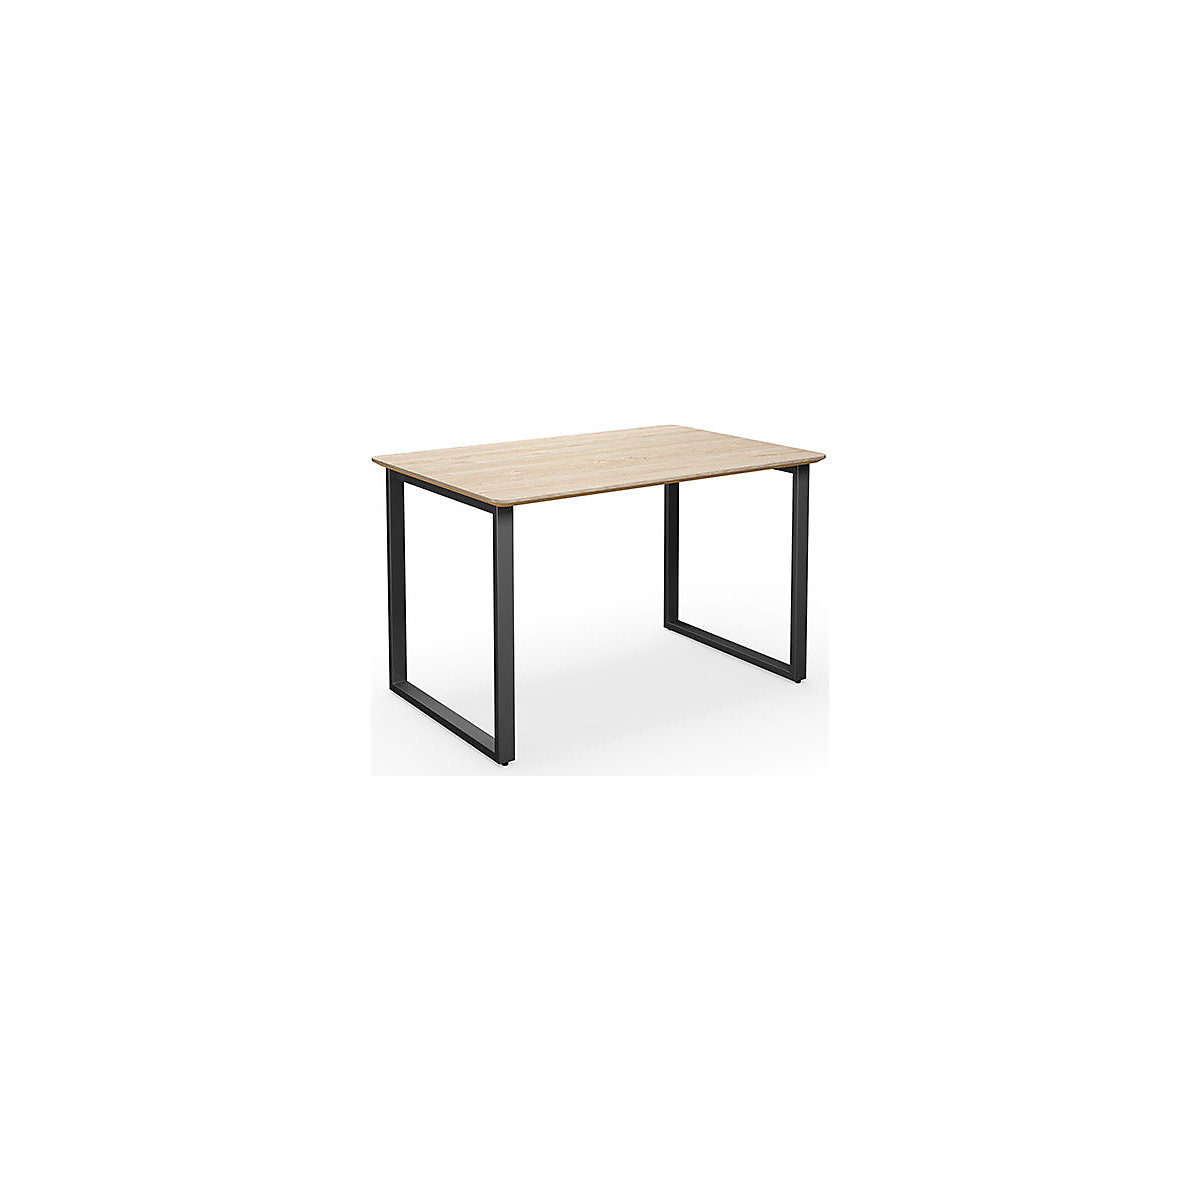 DUO-O Trend multi-purpose desk, straight tabletop, rounded corners, WxD 1200 x 800 mm, oak, black-1